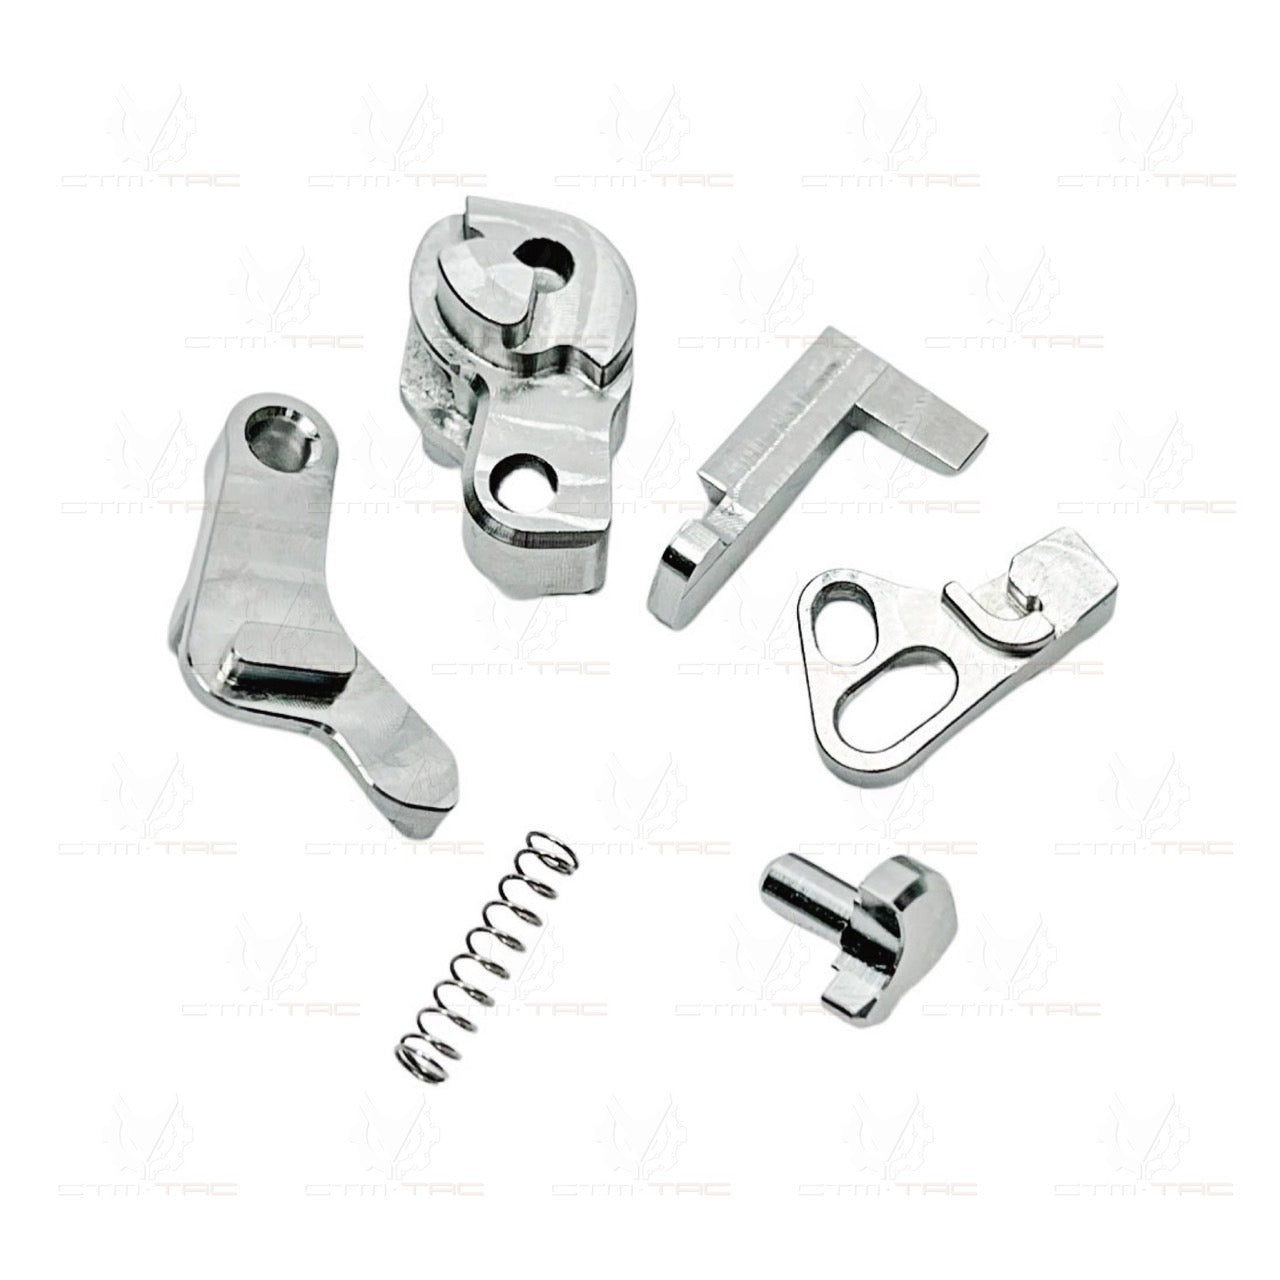 CTM - AAP-01/C Stainless Steel Hammer Set + Fire Pin Lock